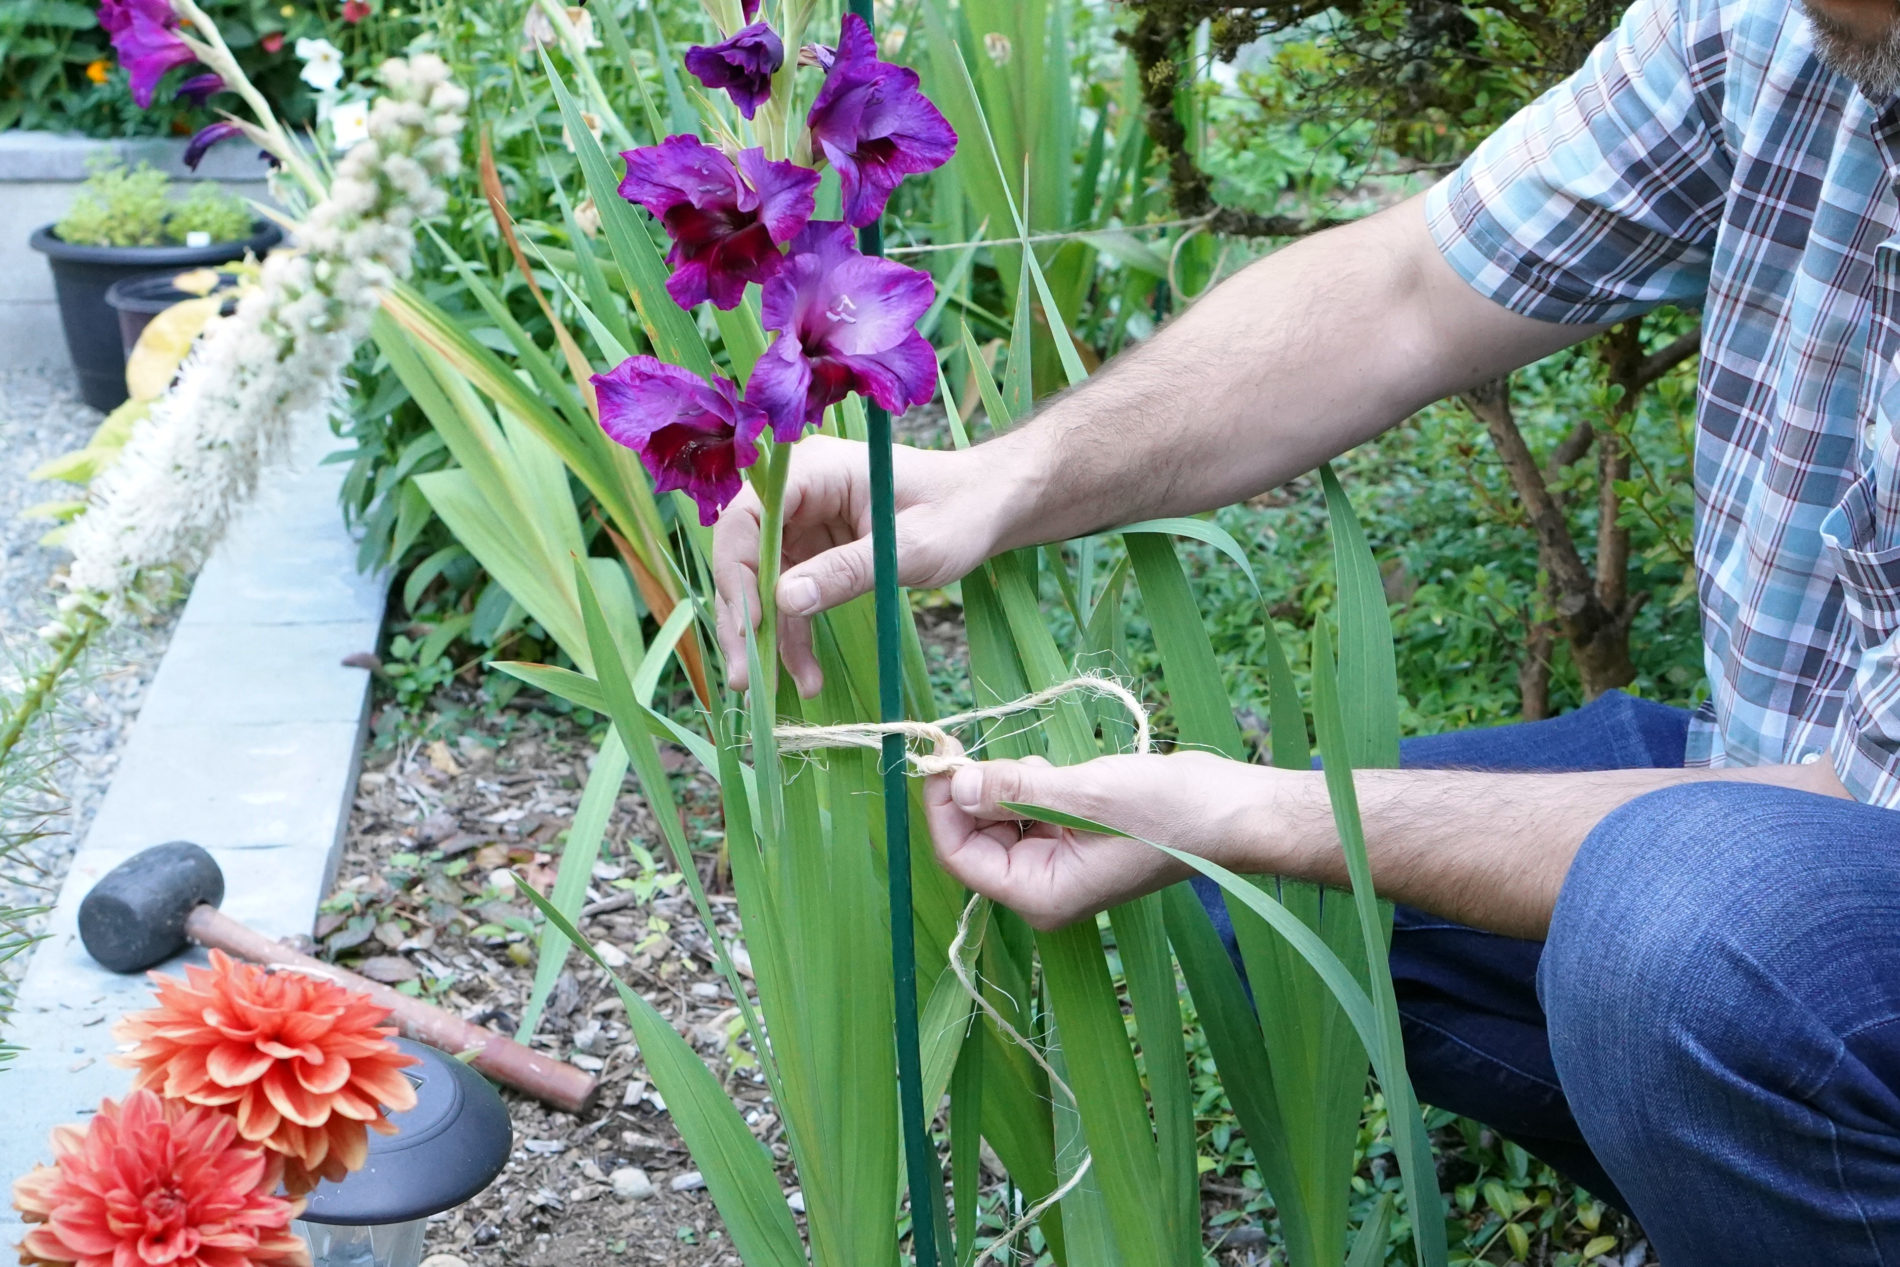 Tying a purple gladiolus plant stem to a plant stake